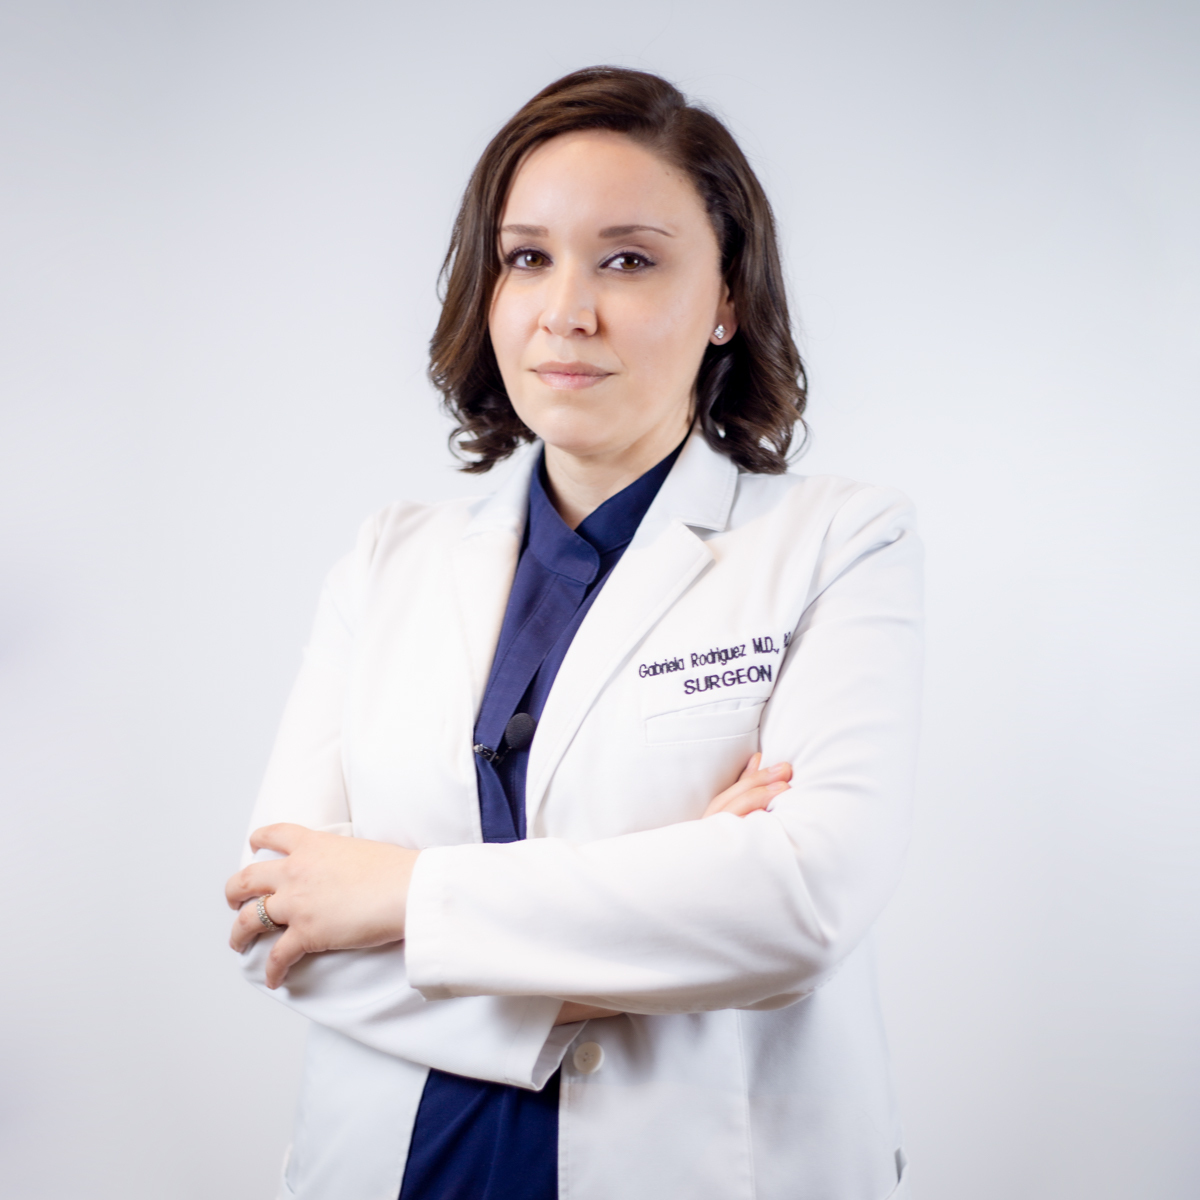 Doctor Gabriela Rodriguez bariatric surgeon